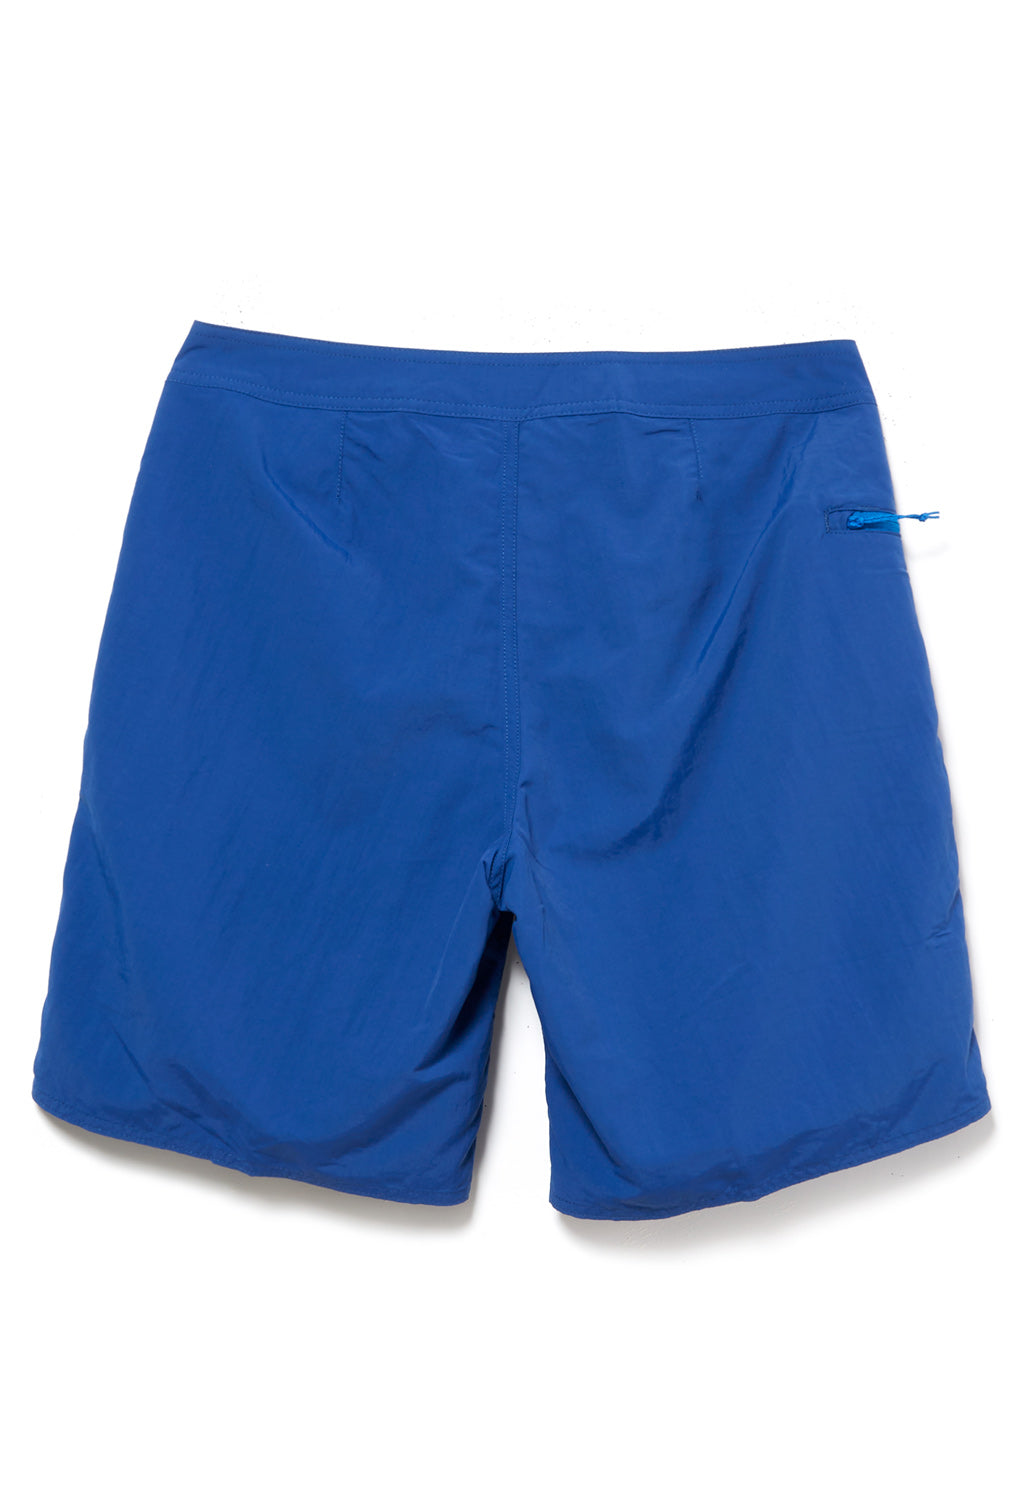 Patagonia Wavefarer Men's 19" Board Shorts - Superior Blue